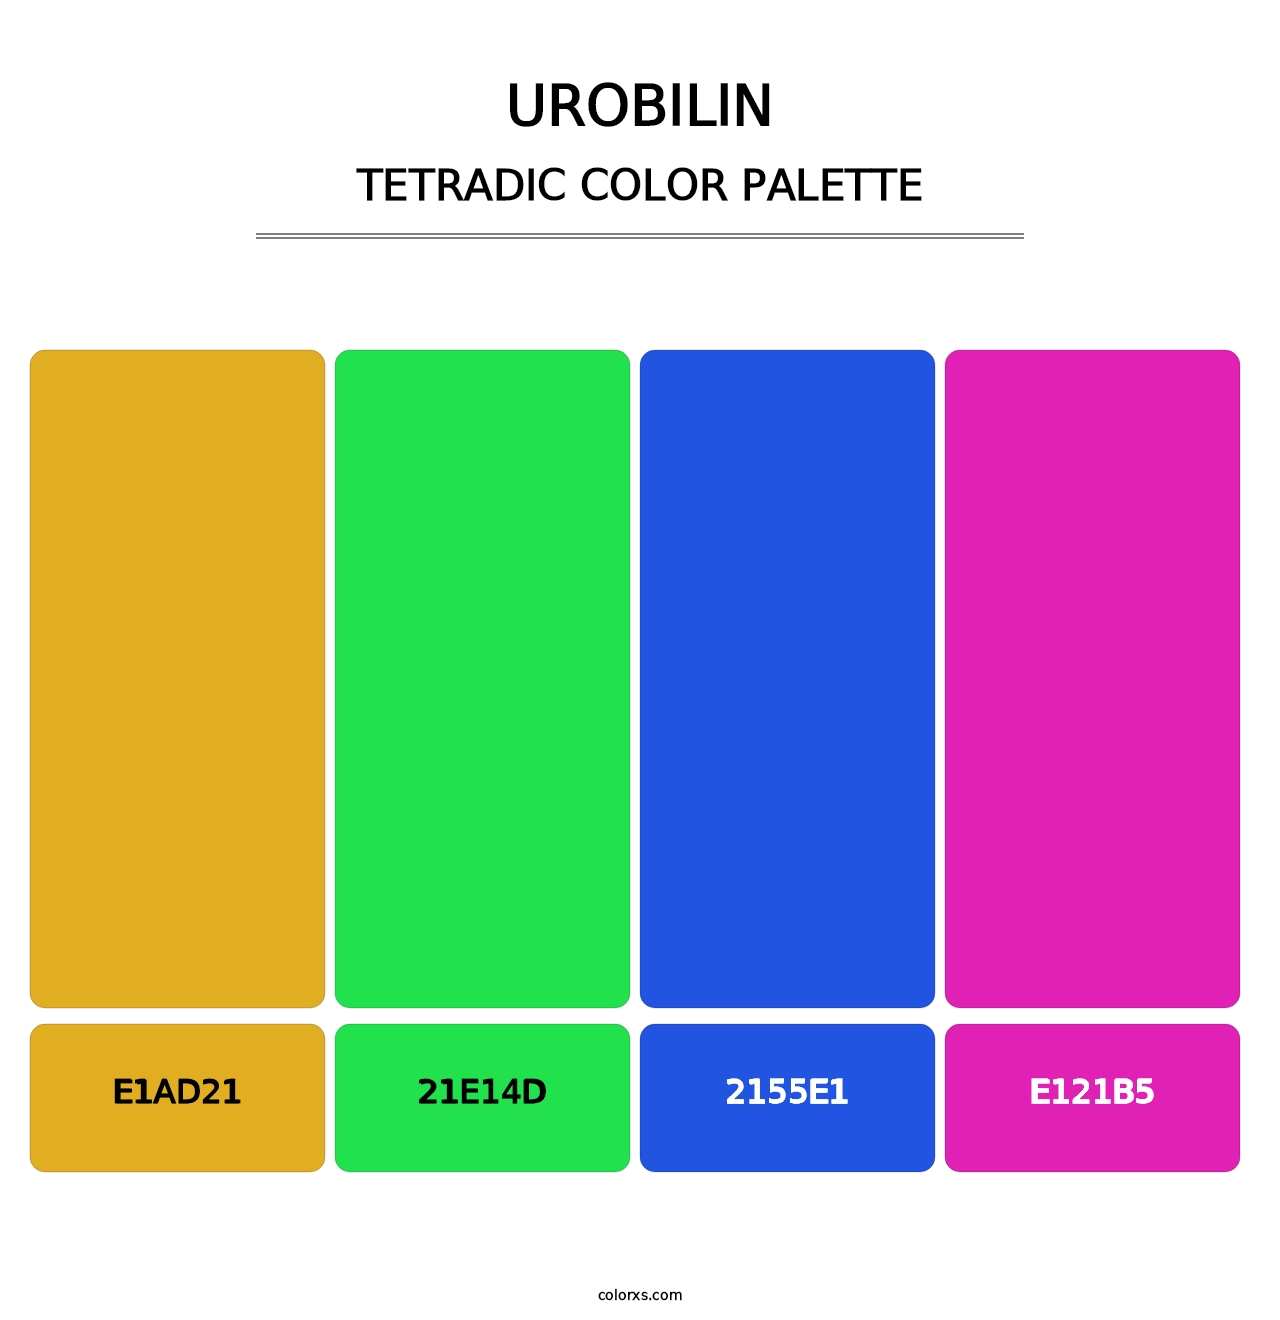 Urobilin - Tetradic Color Palette